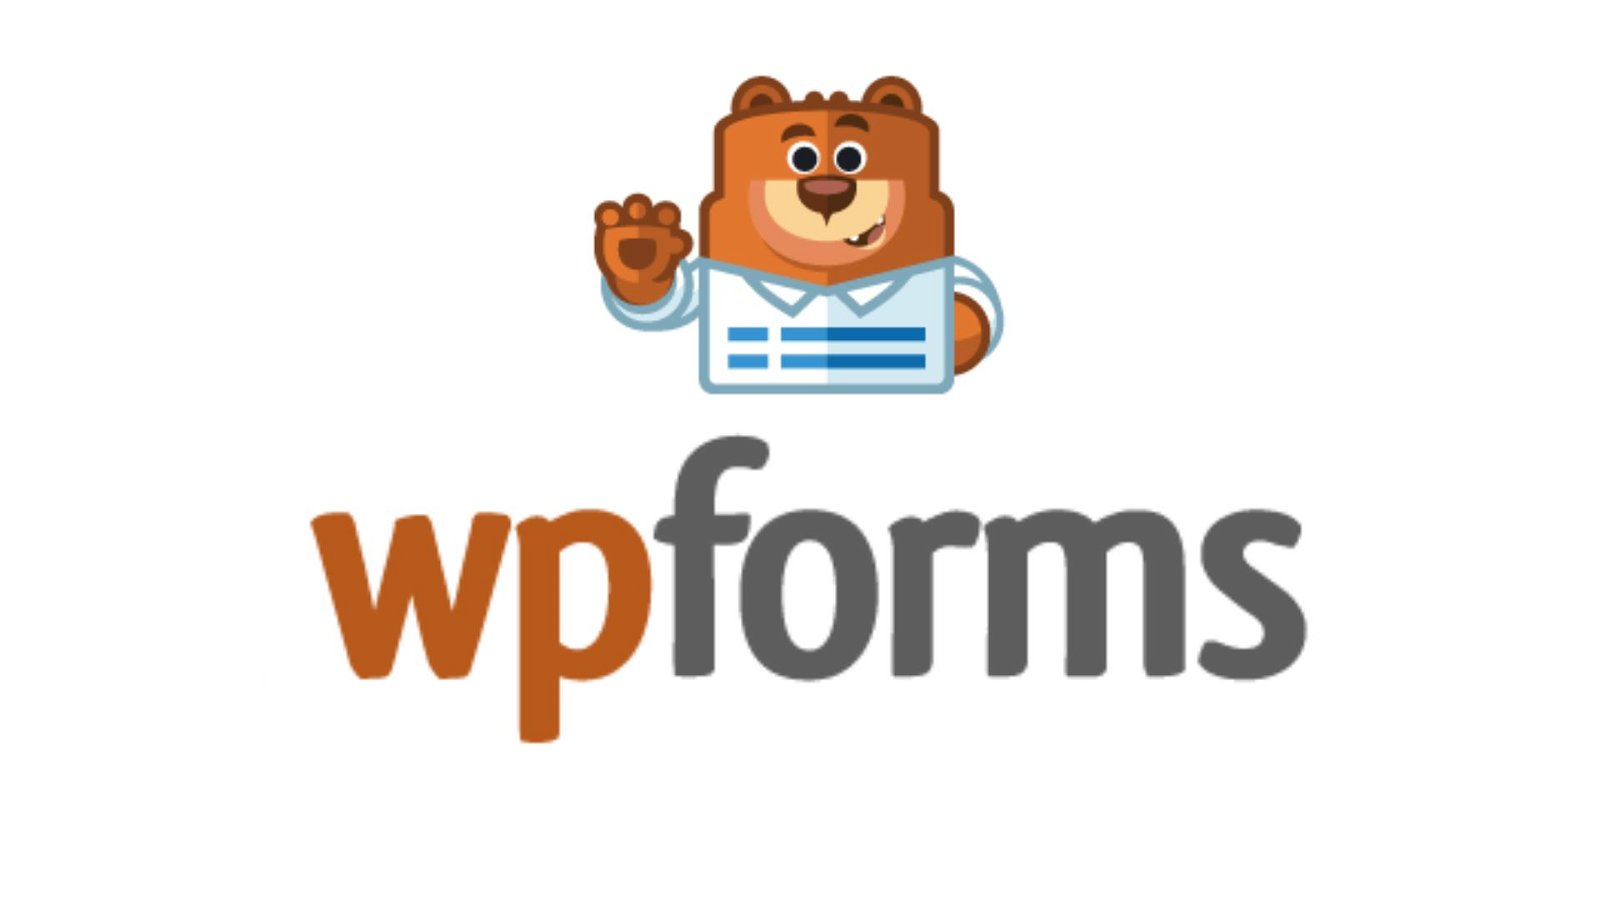 WPForms plugin